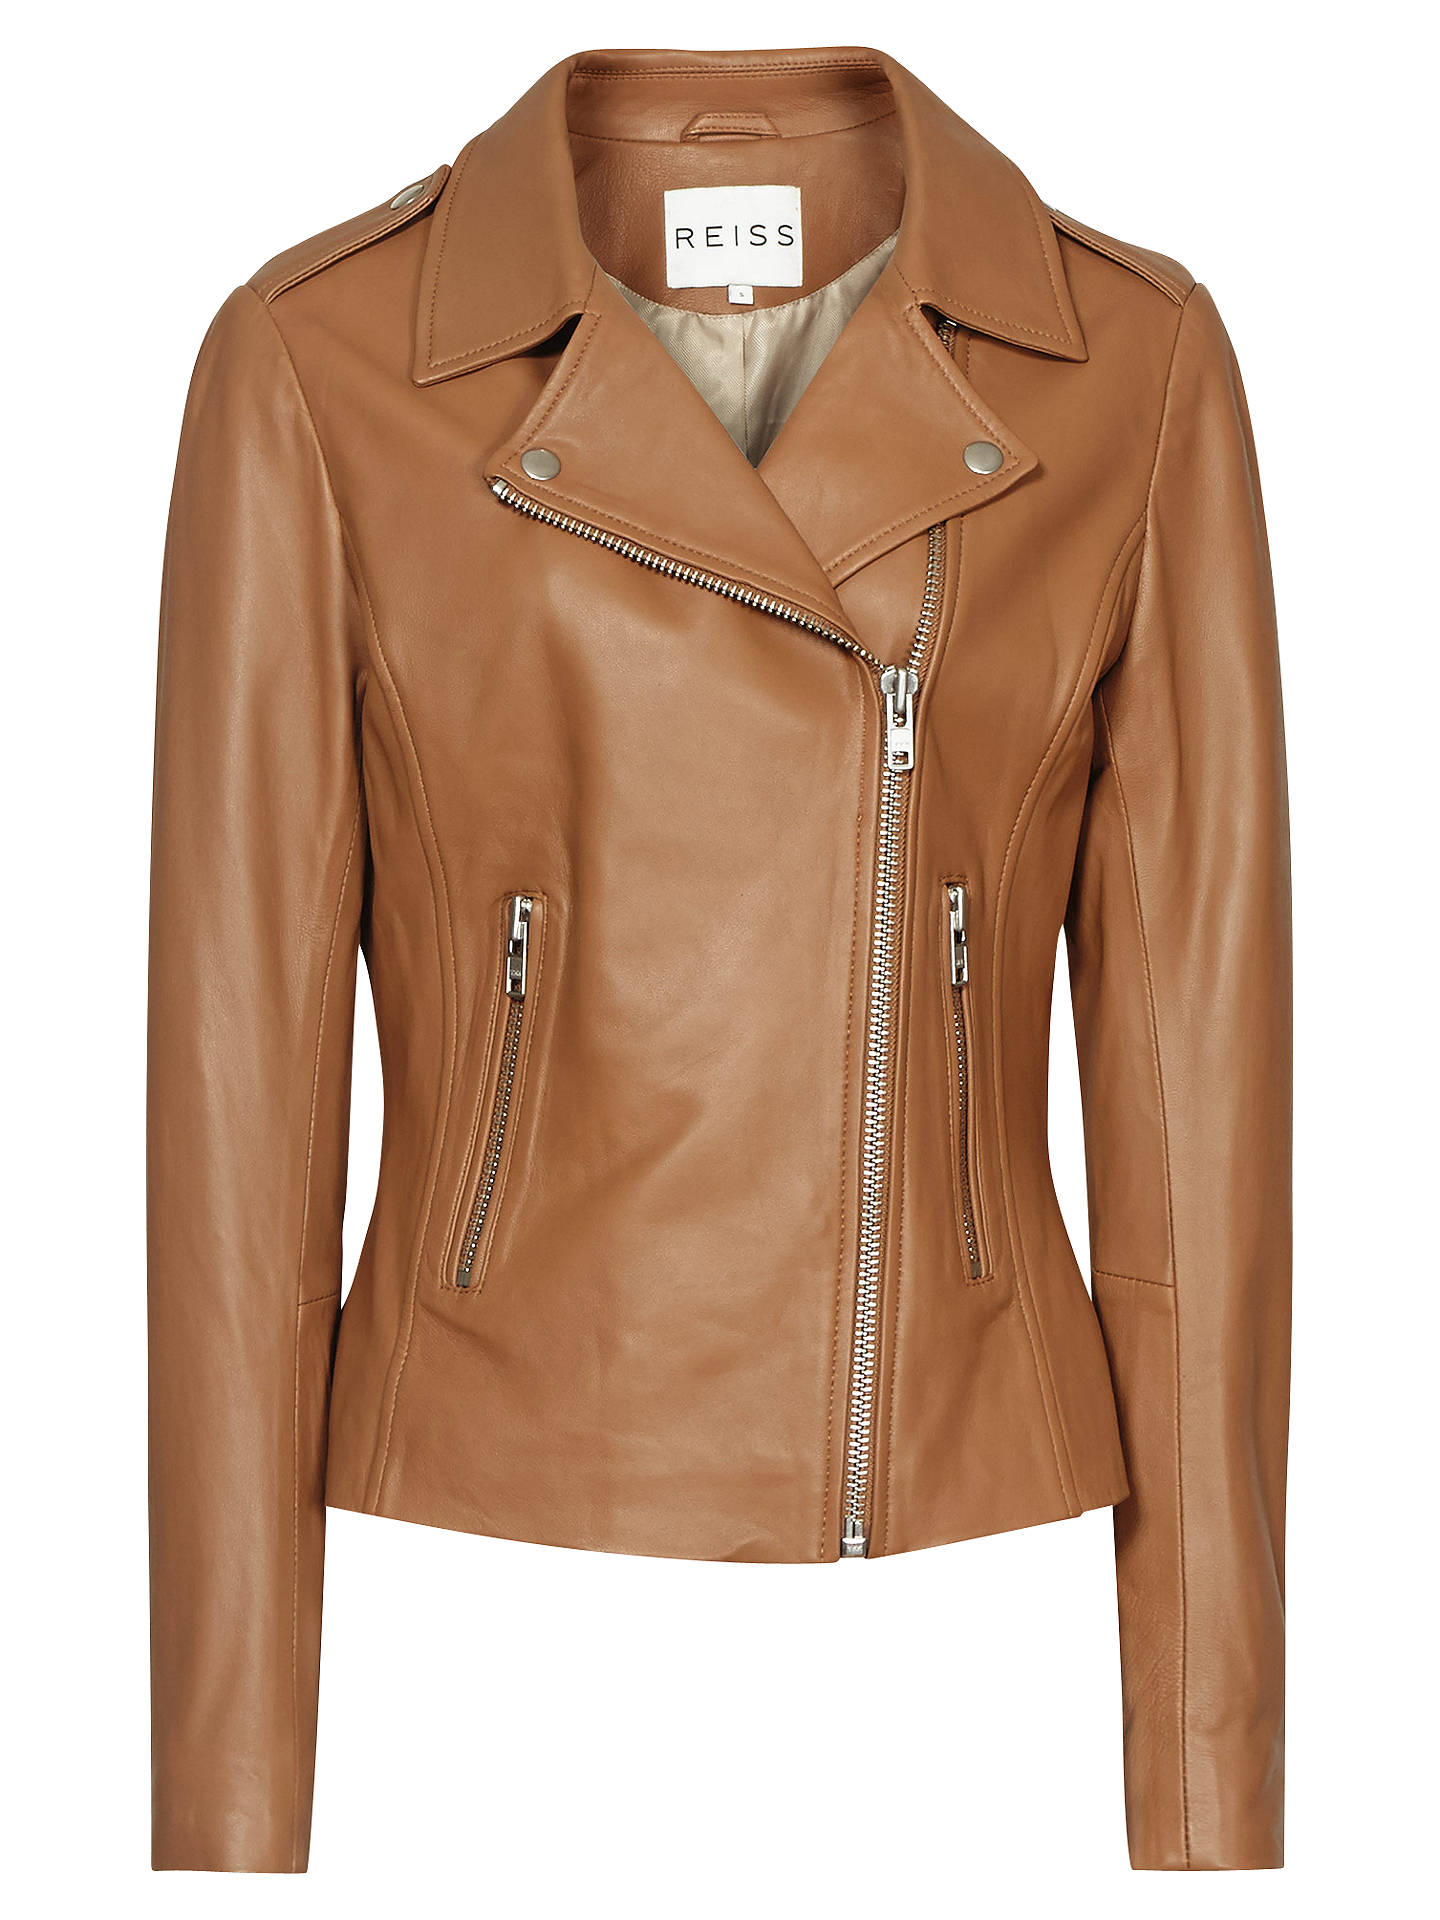 Reiss Leather Biker Jacket, Tan at John Lewis & Partners